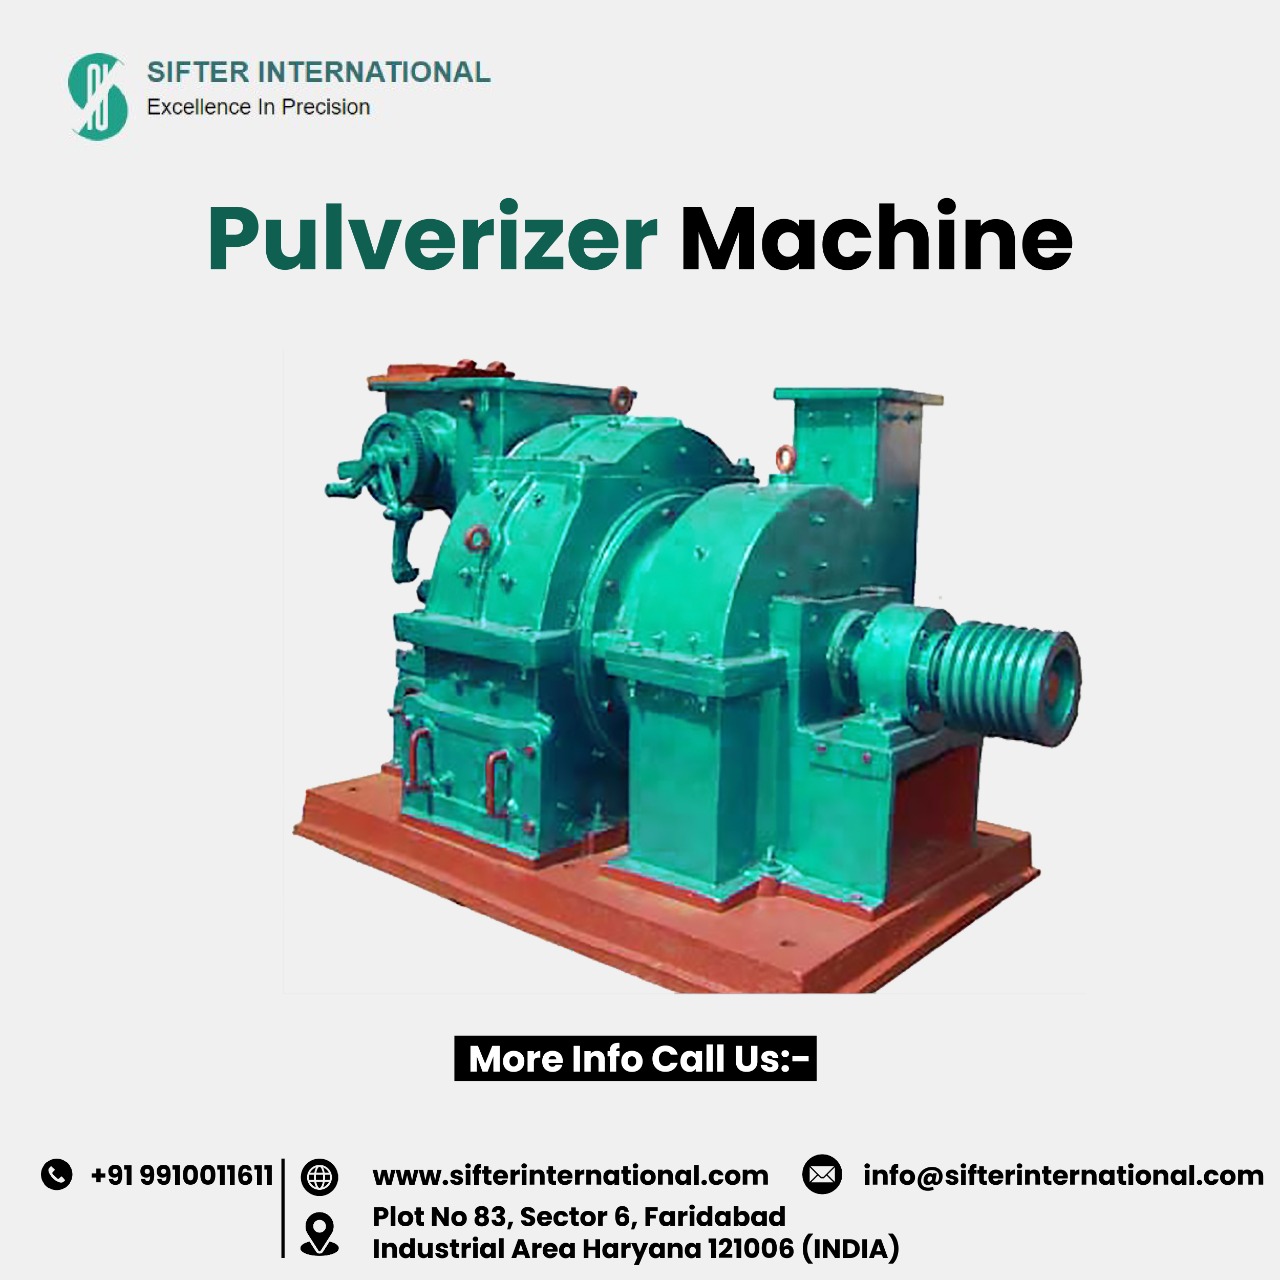 Best Pulverizer Machine Manufacturer and suppliers in India